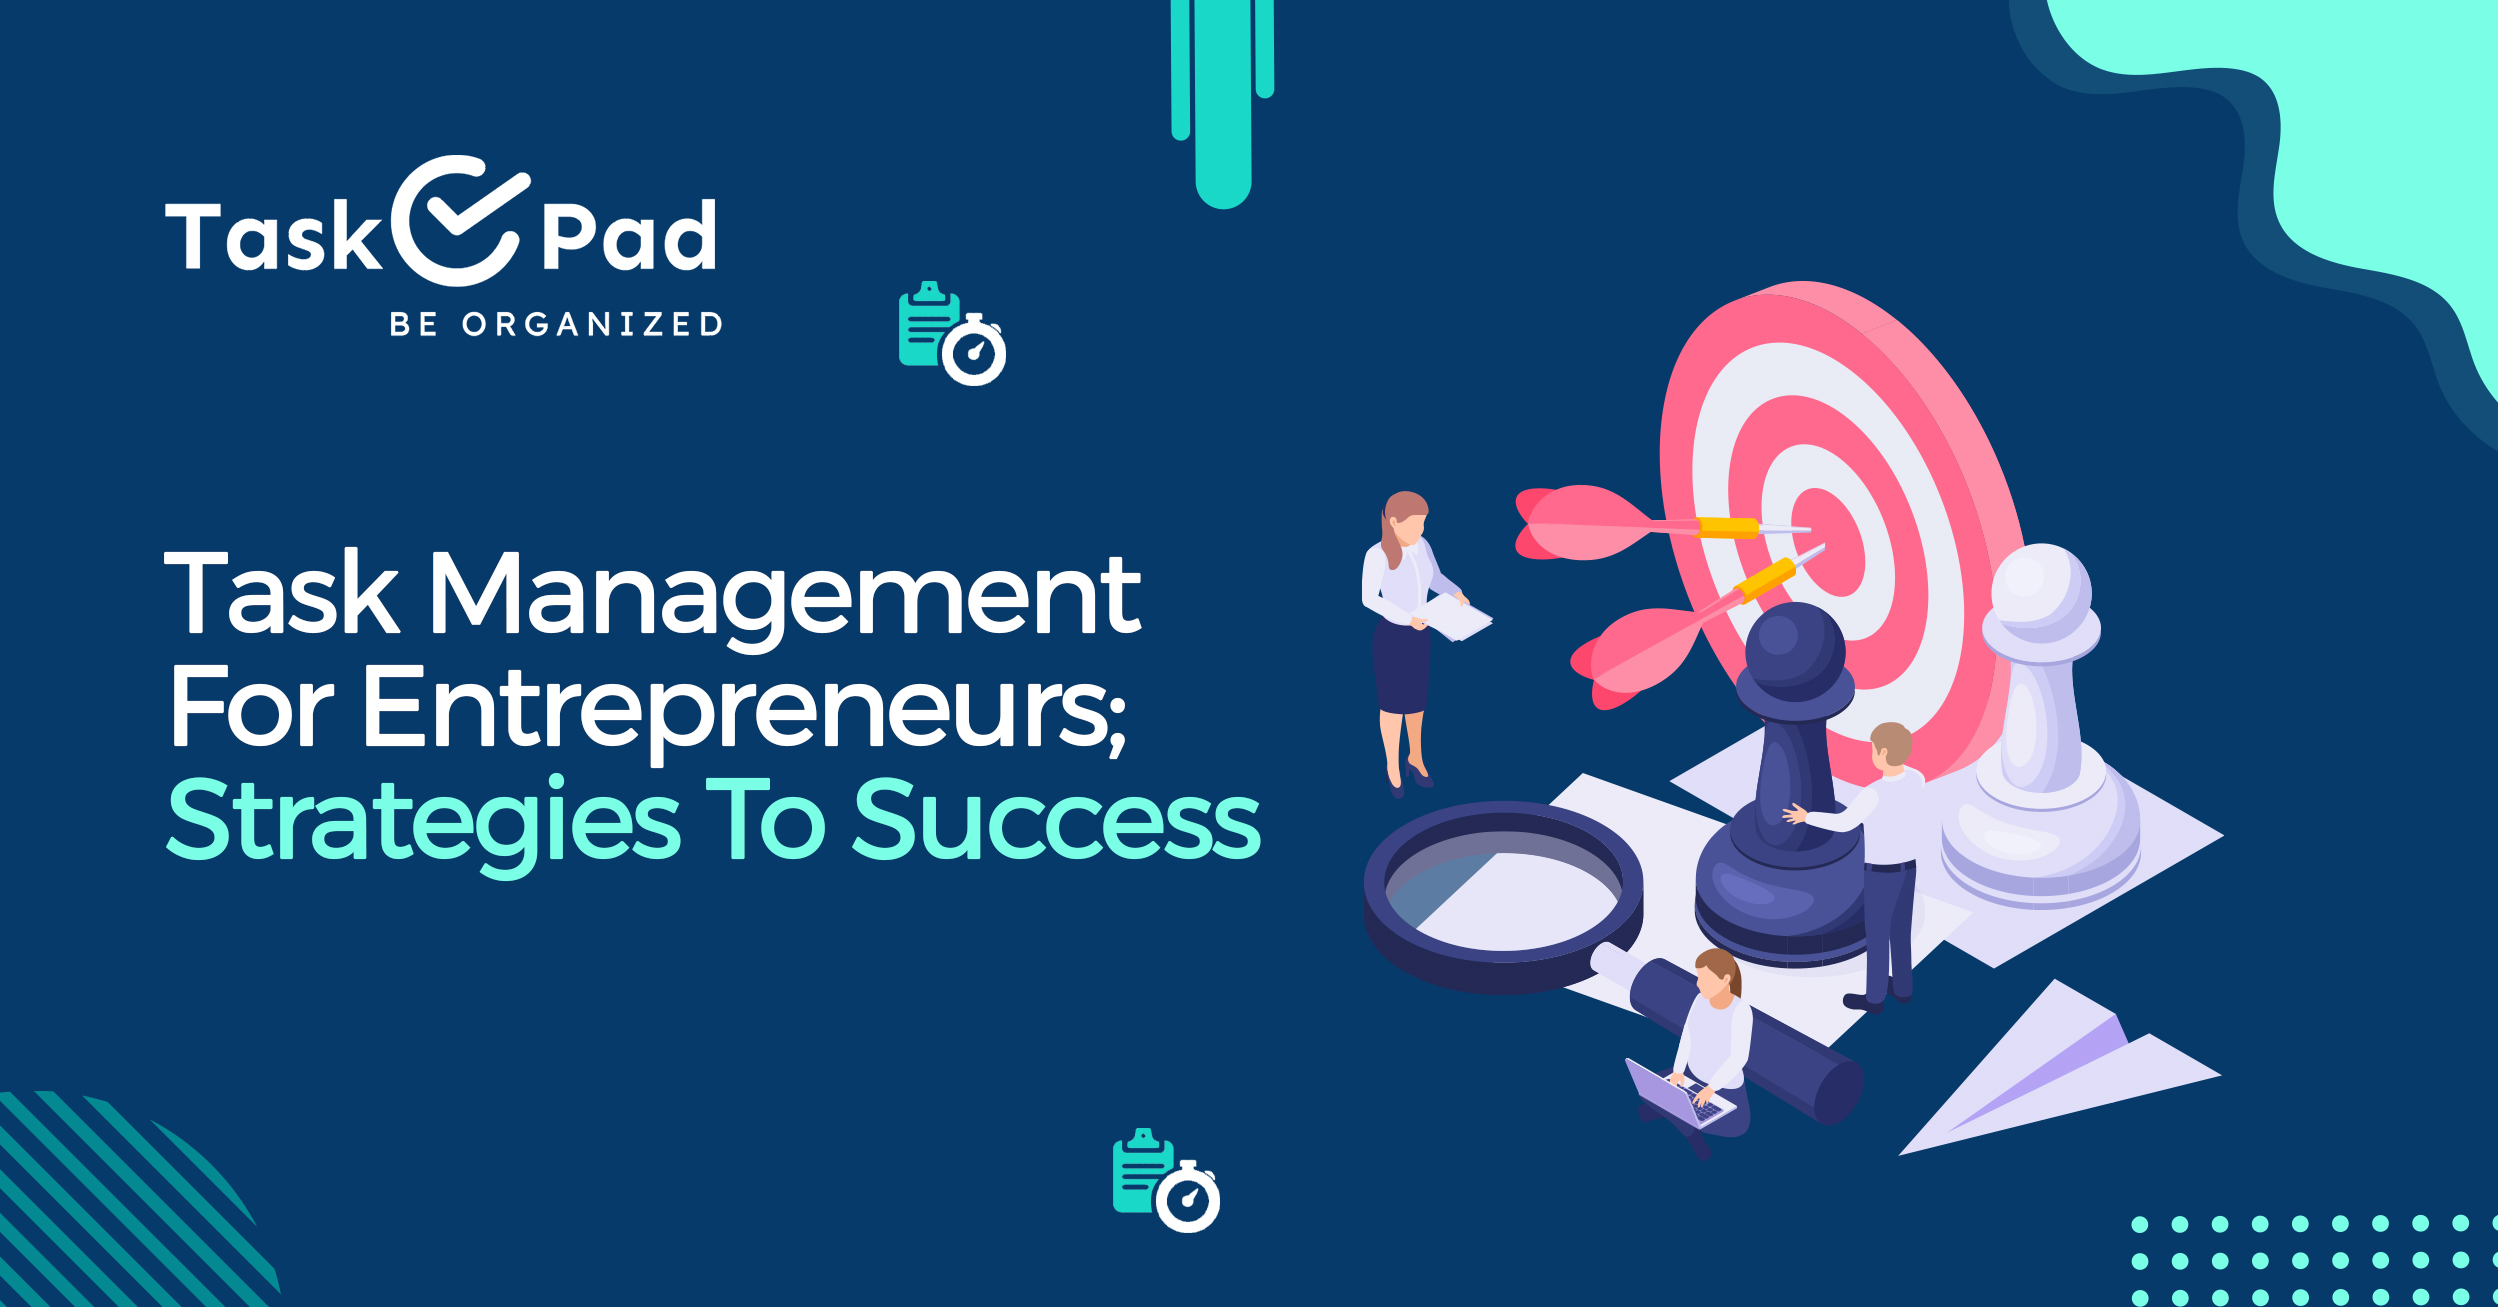 Task Management for Entrepreneurs: Strategies for Success with Taskopad